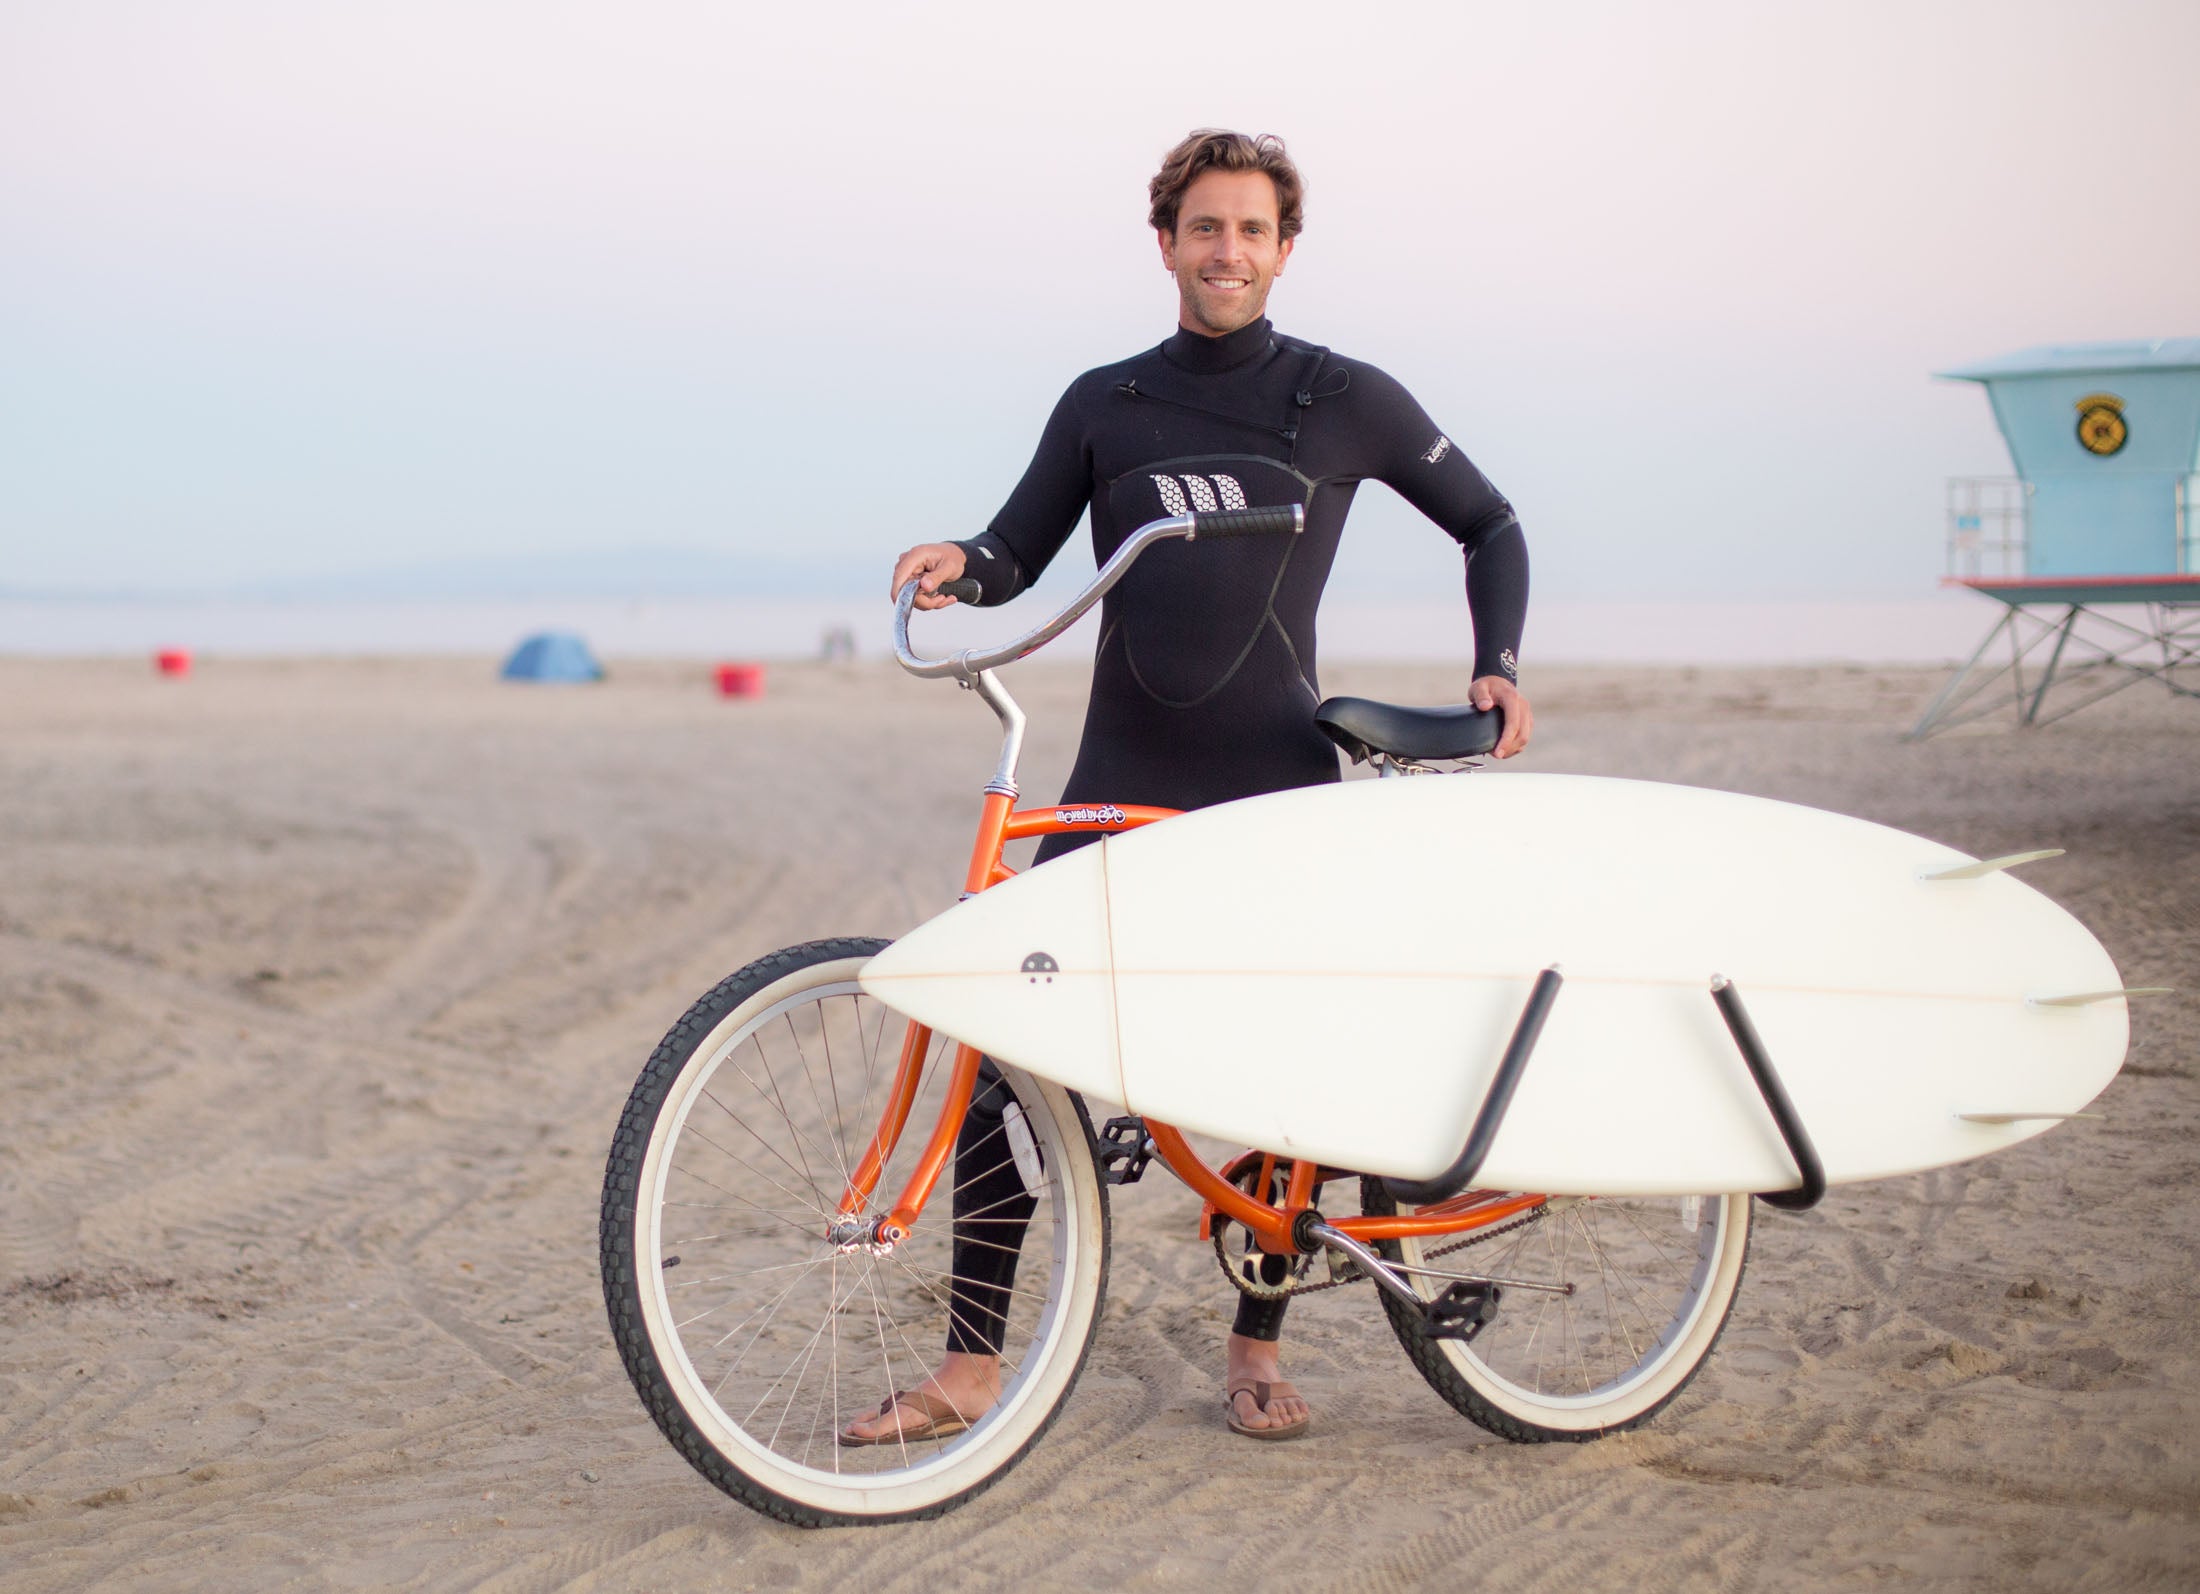 Man on a beach with an orange bike, an MBB shortboard rack carrying a shortboard